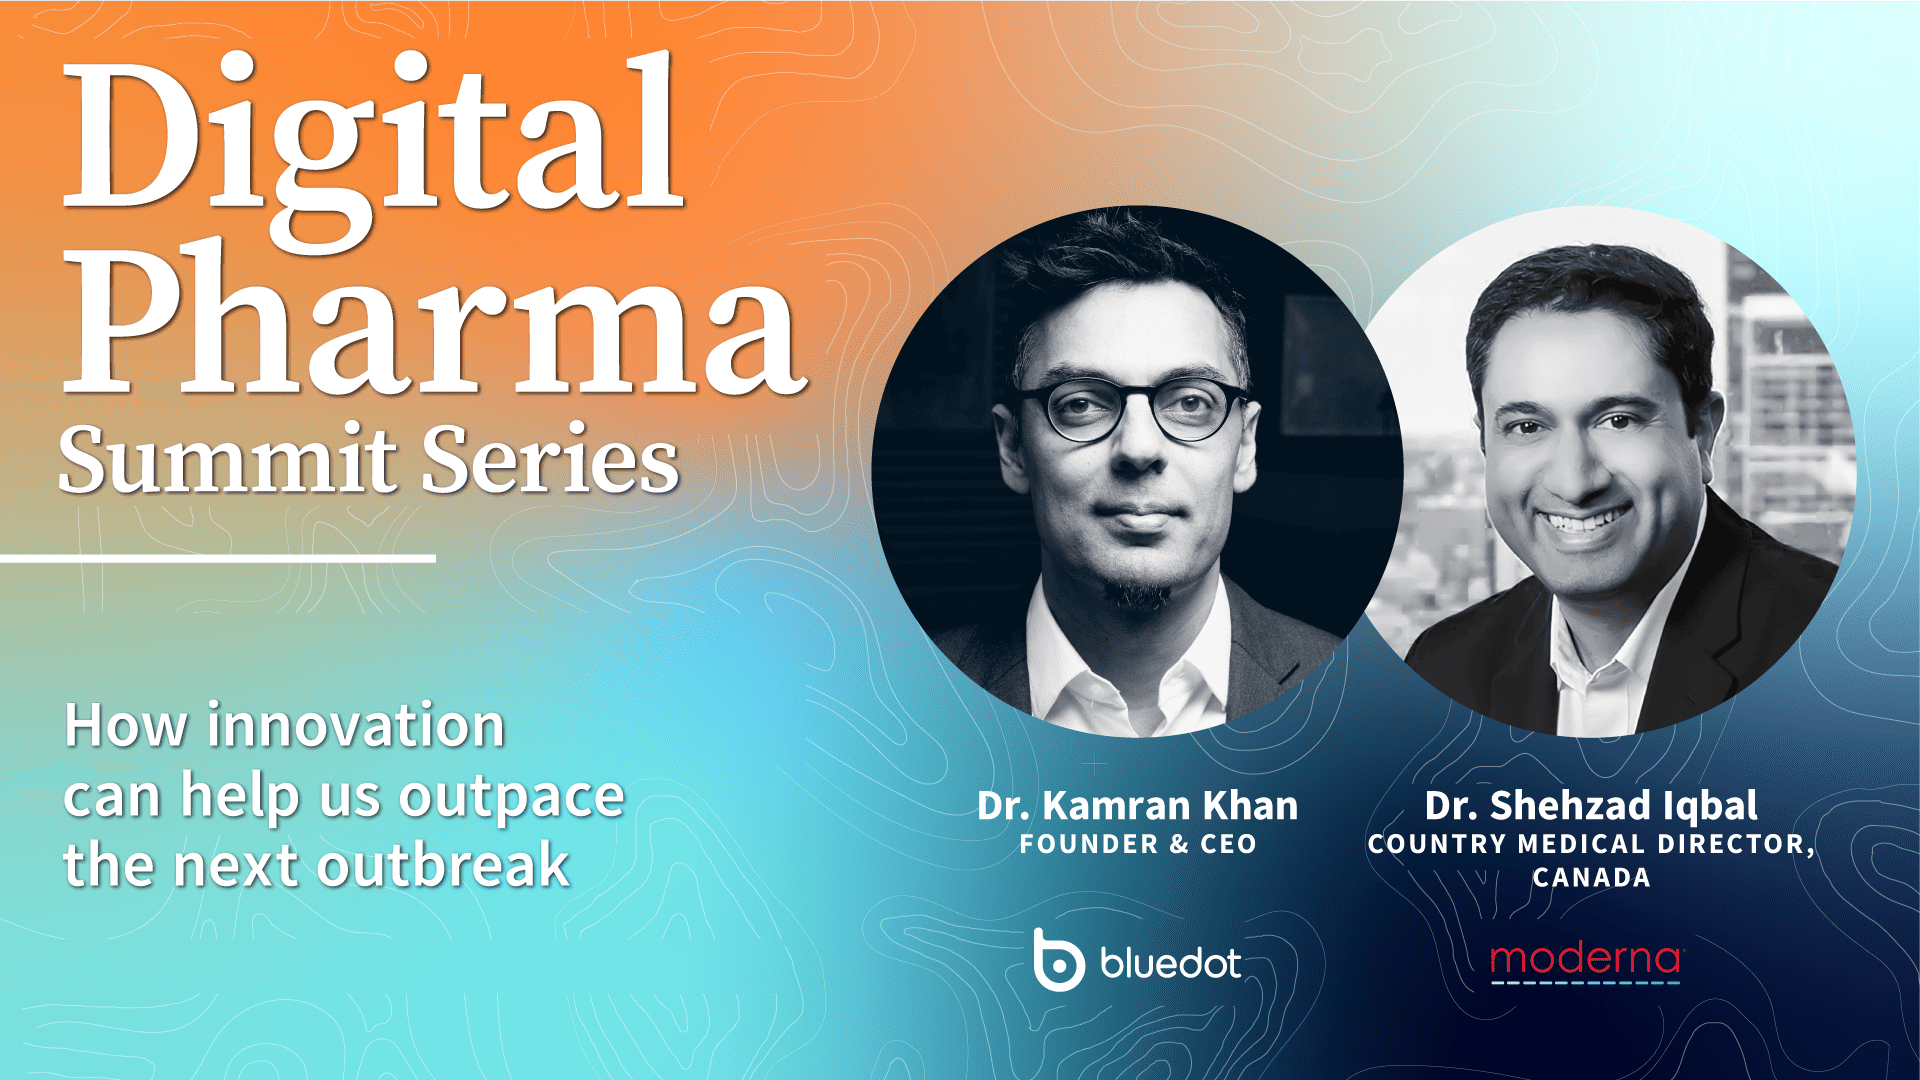 On Demand Webinar: BlueDot Digital Pharma Summit Series #2 with Dr. Shehzad Iqbal, Country Medical Director of Canada, at Moderna